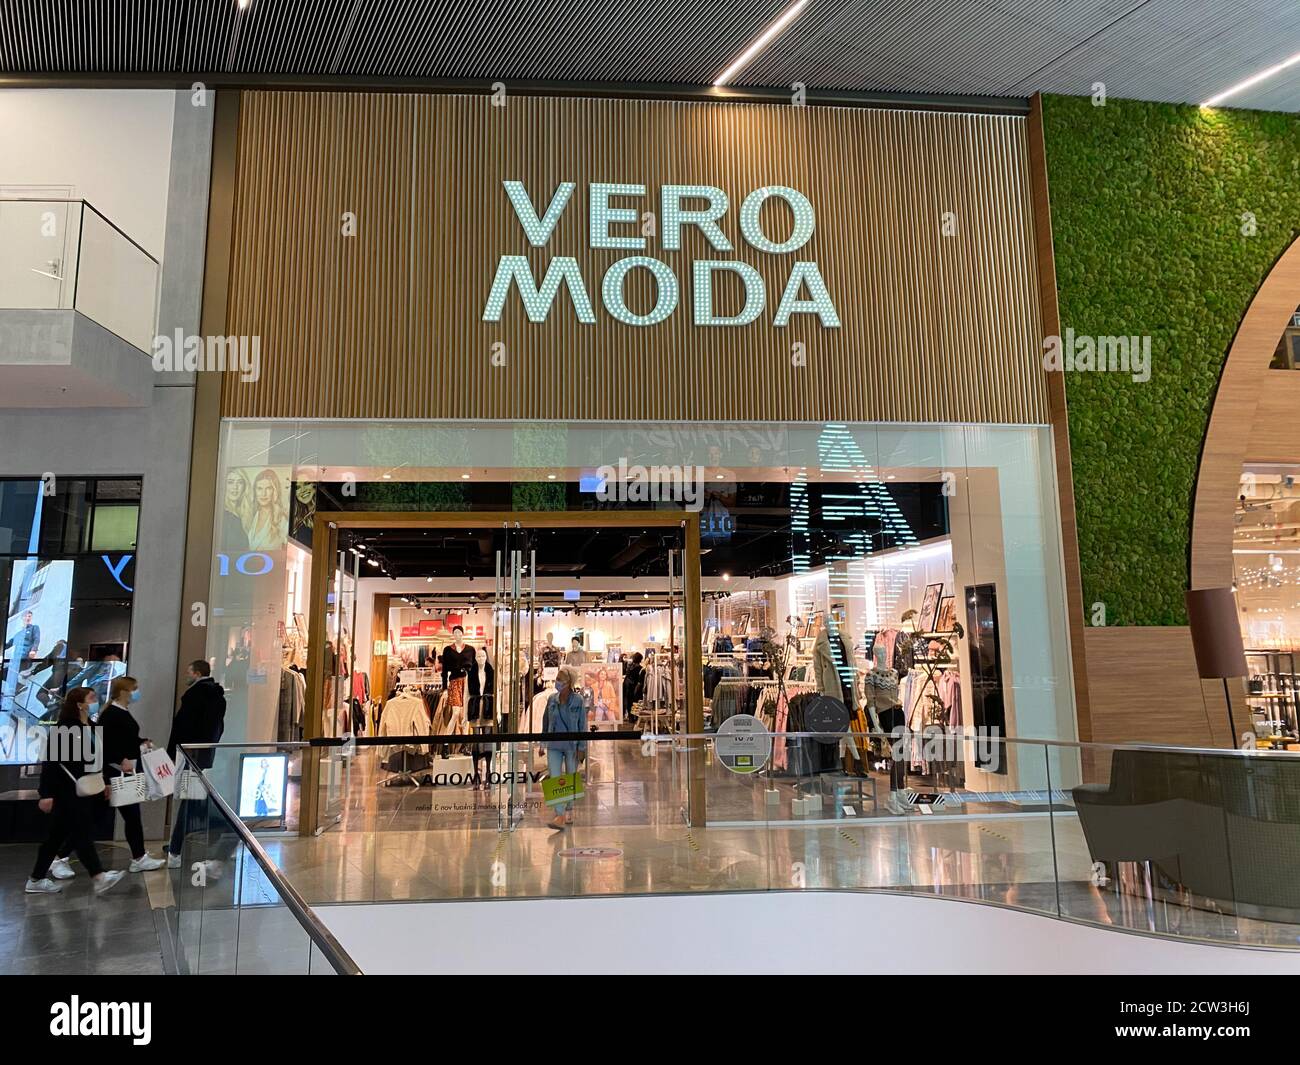 Vero moda logo hi-res stock photography and images - Alamy